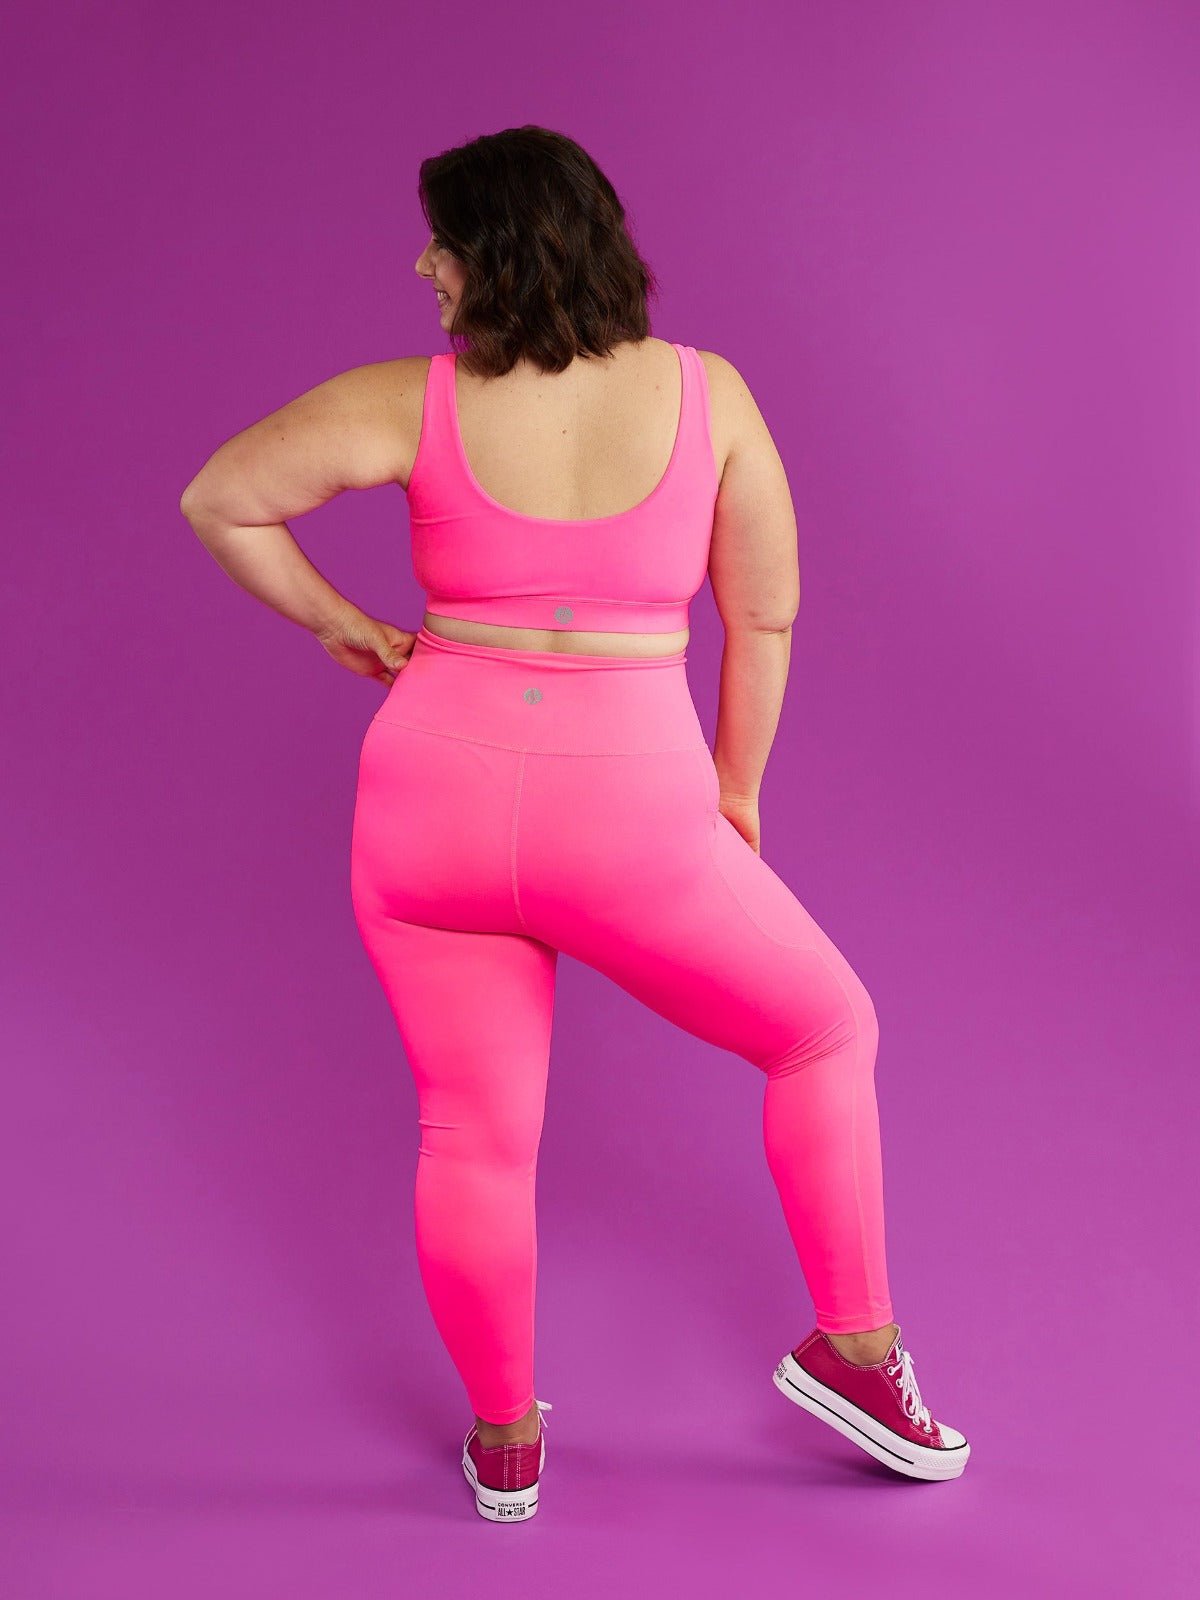 Neon Pink Everyday Legging - 7/8 length - no see through pink leggings